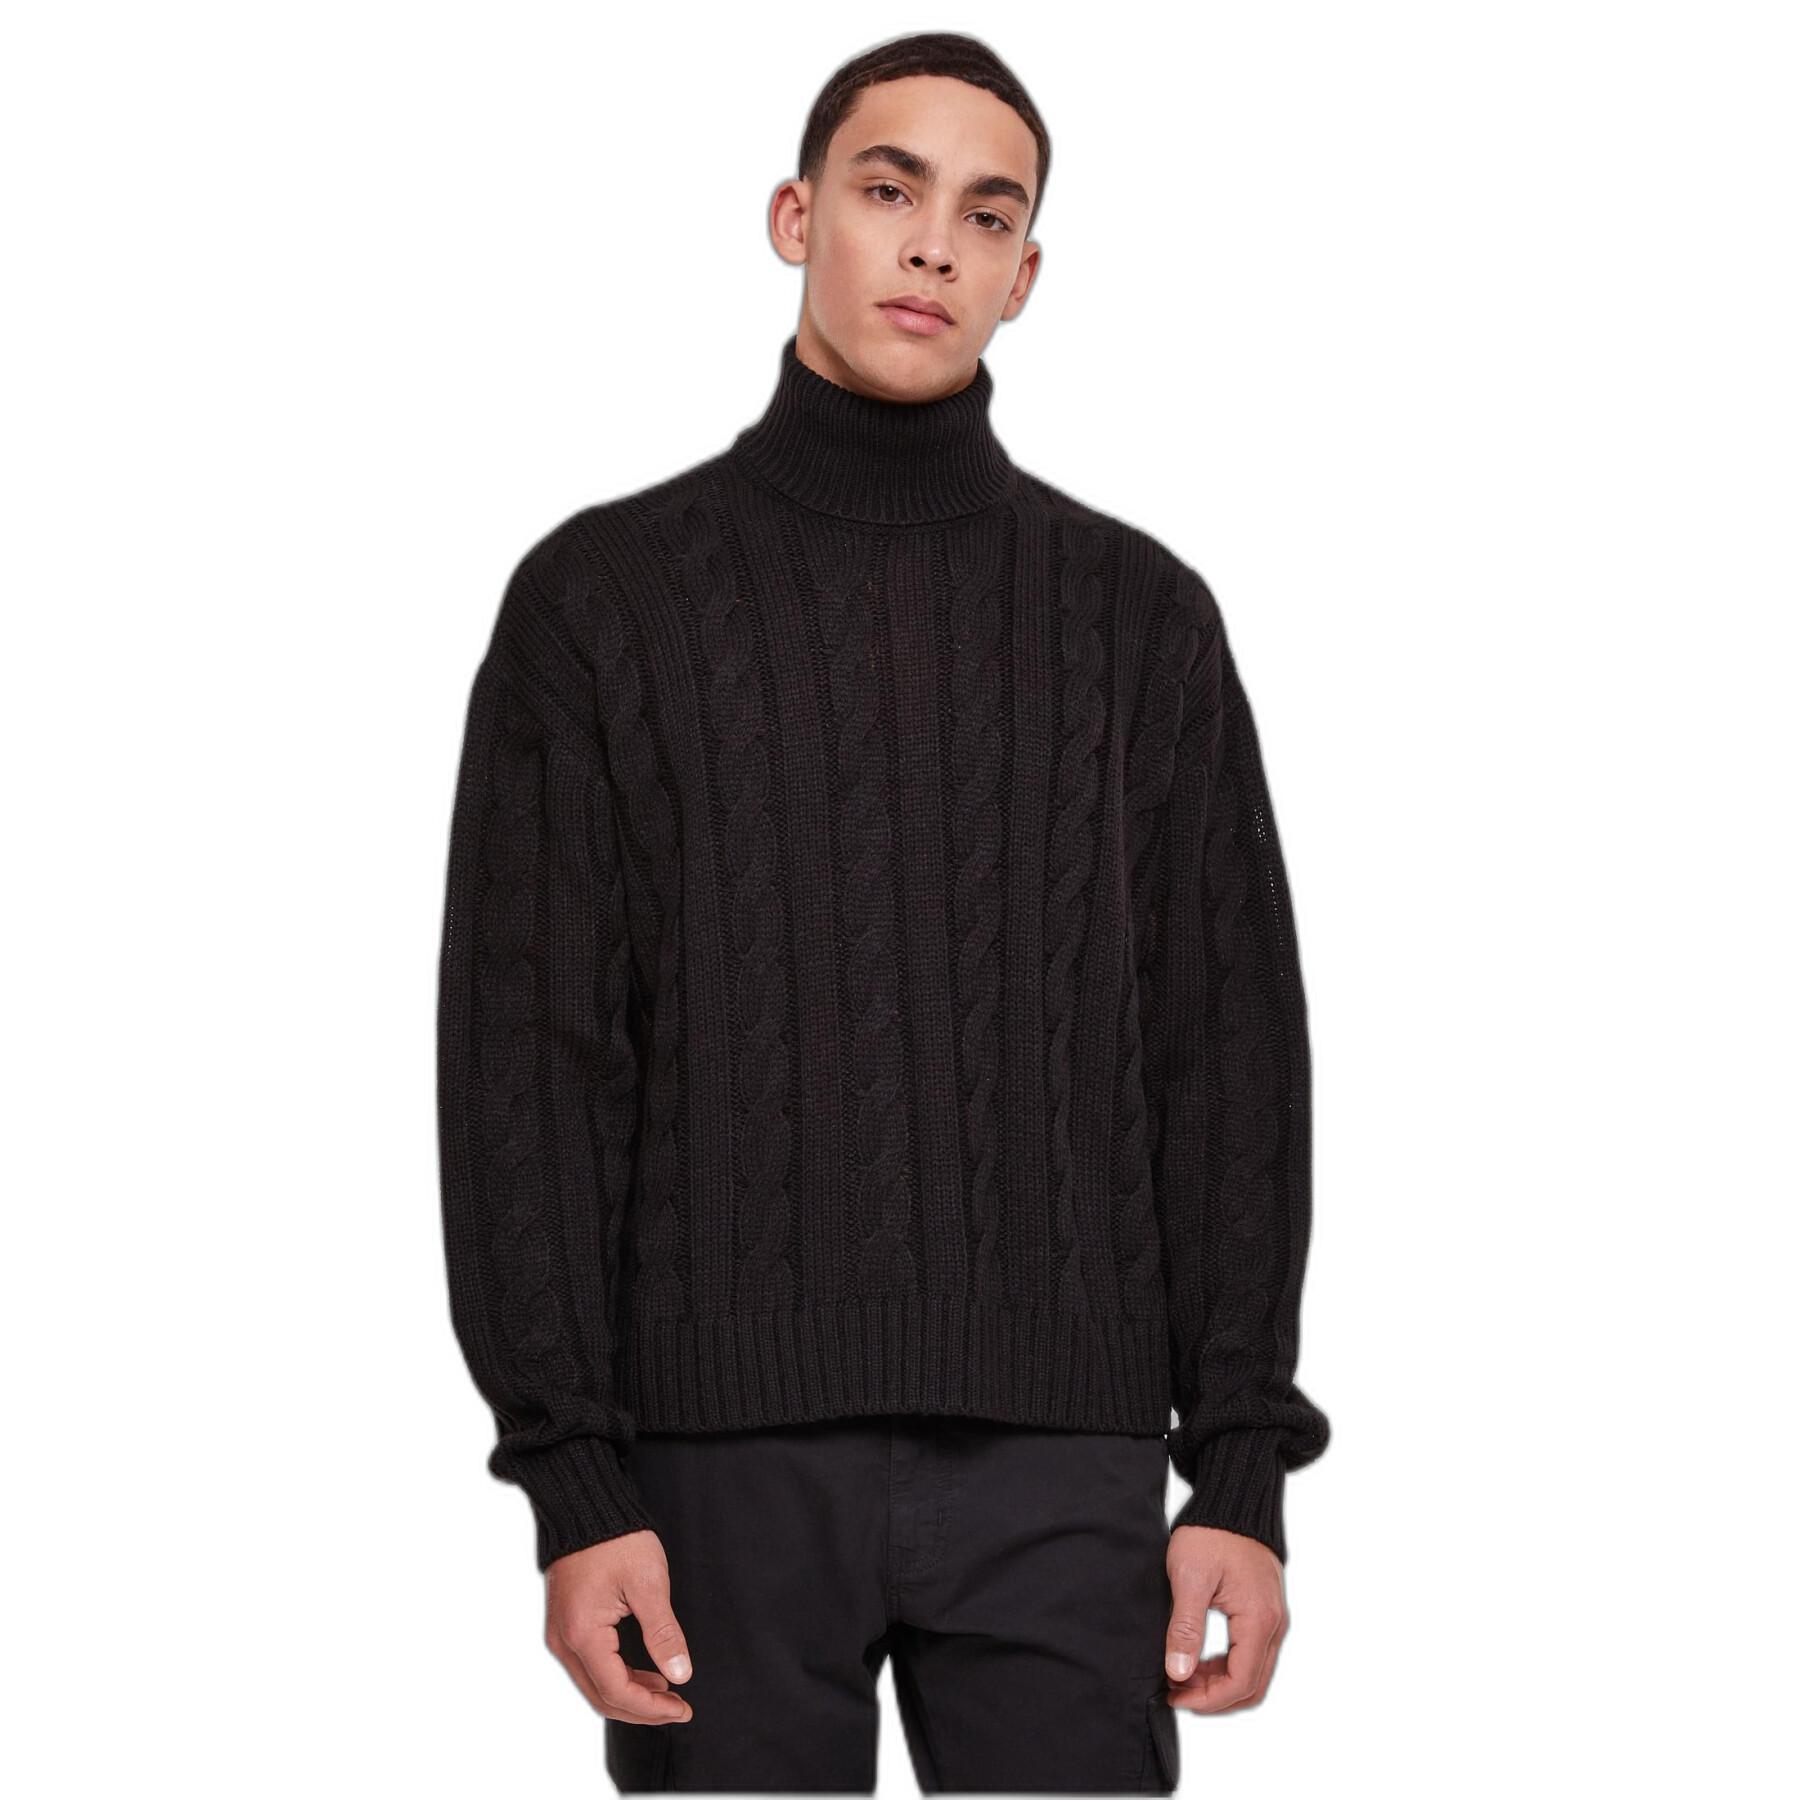 Large size turtleneck sweater Urban Classics